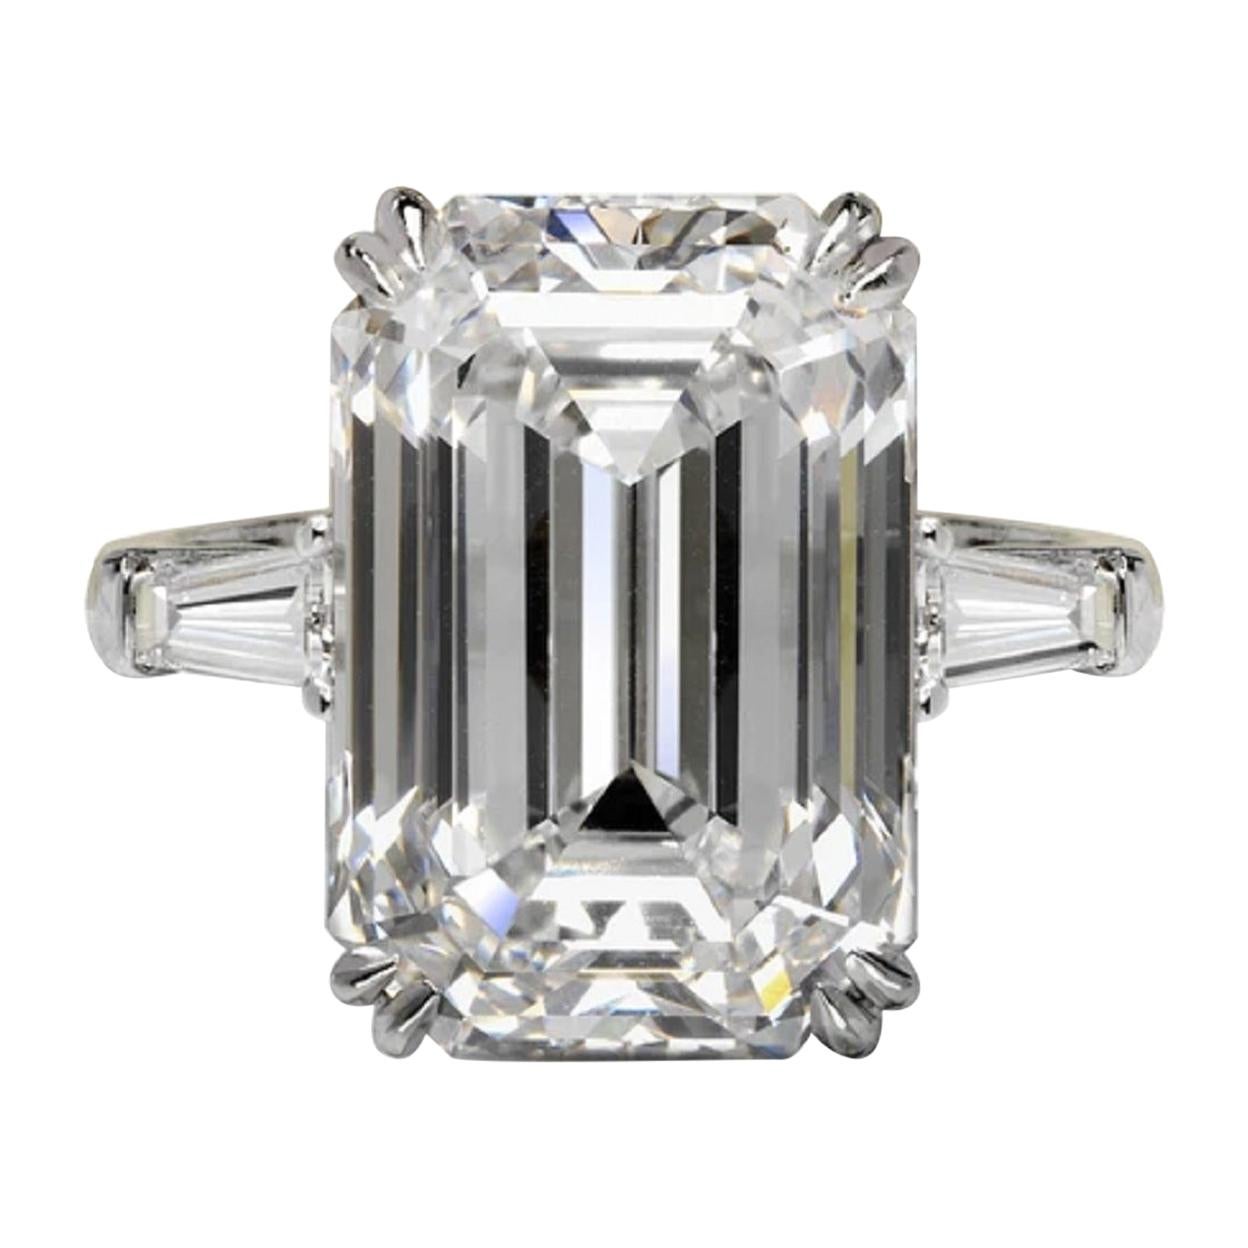 GIA Certified 3.65 Carat Emerald Cut Diamond Ring